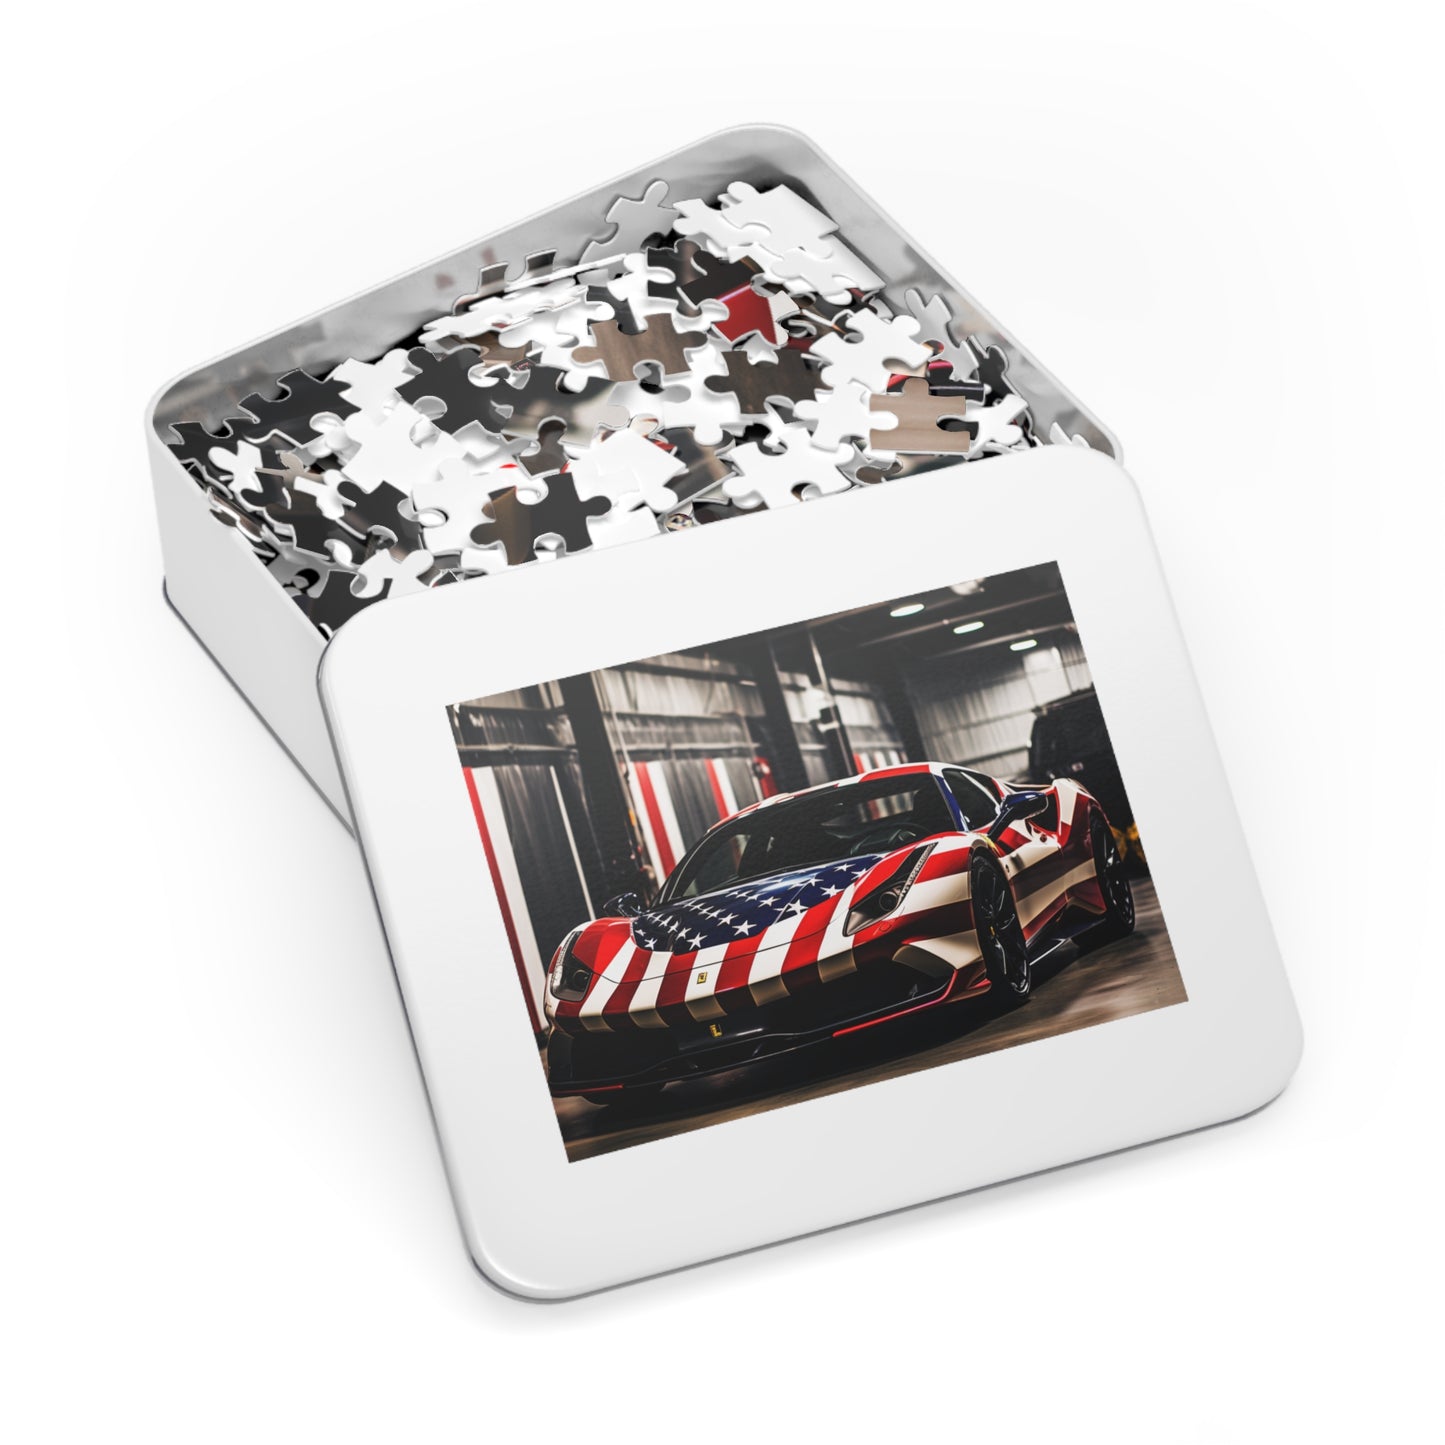 Jigsaw Puzzle (30, 110, 252, 500,1000-Piece) American Flag Farrari 3